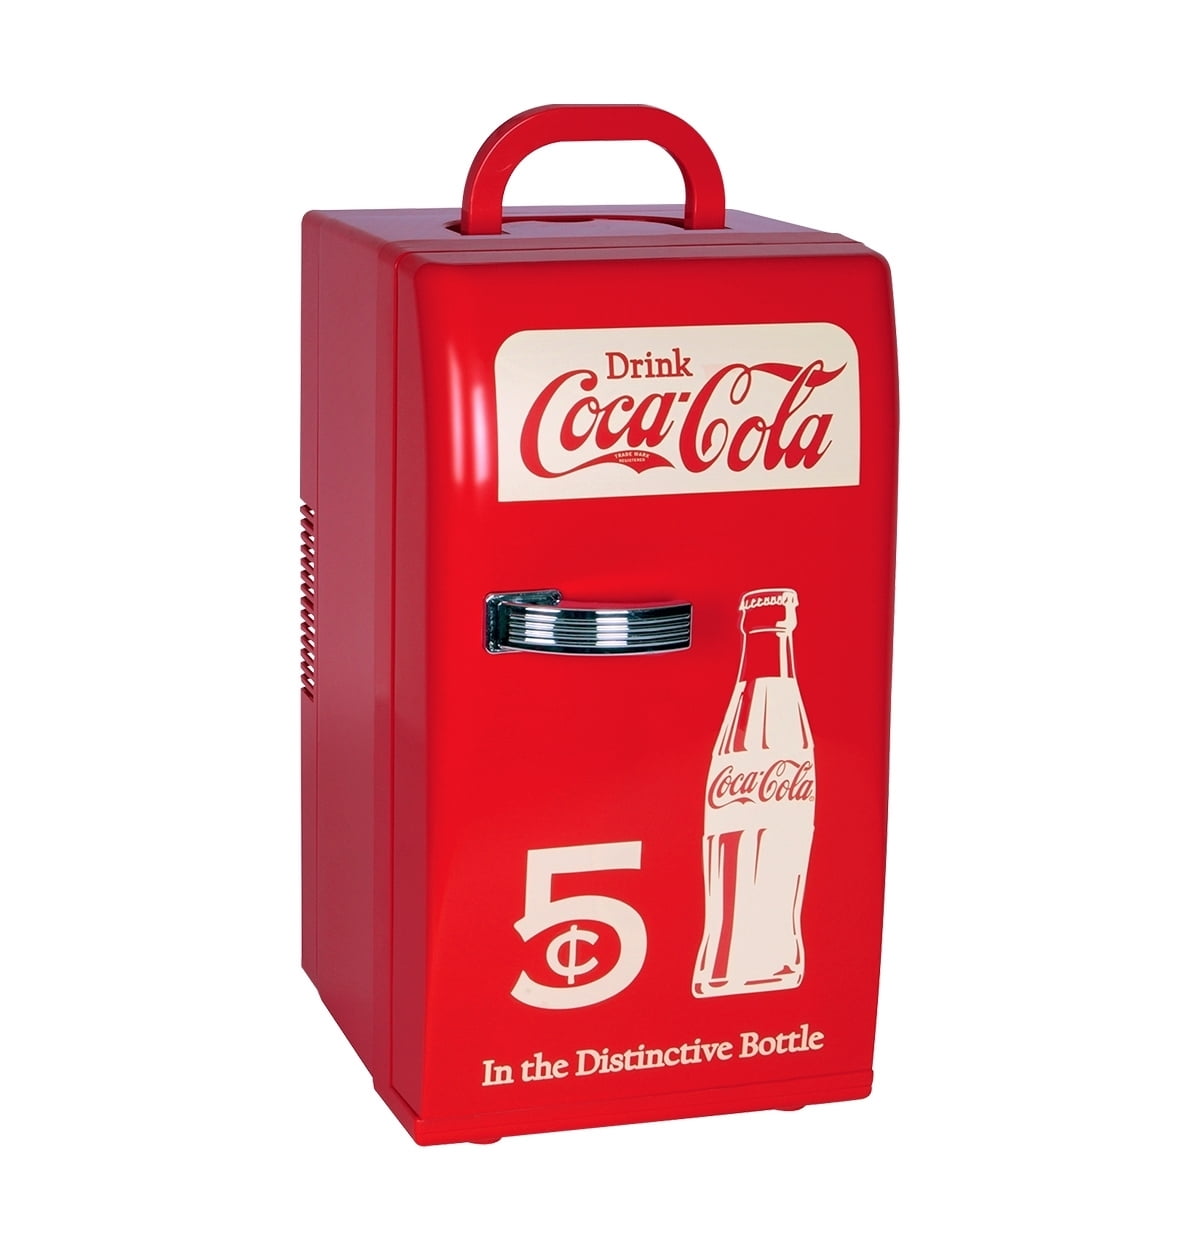 Coca Cola Classic Thermoelectric Cooler